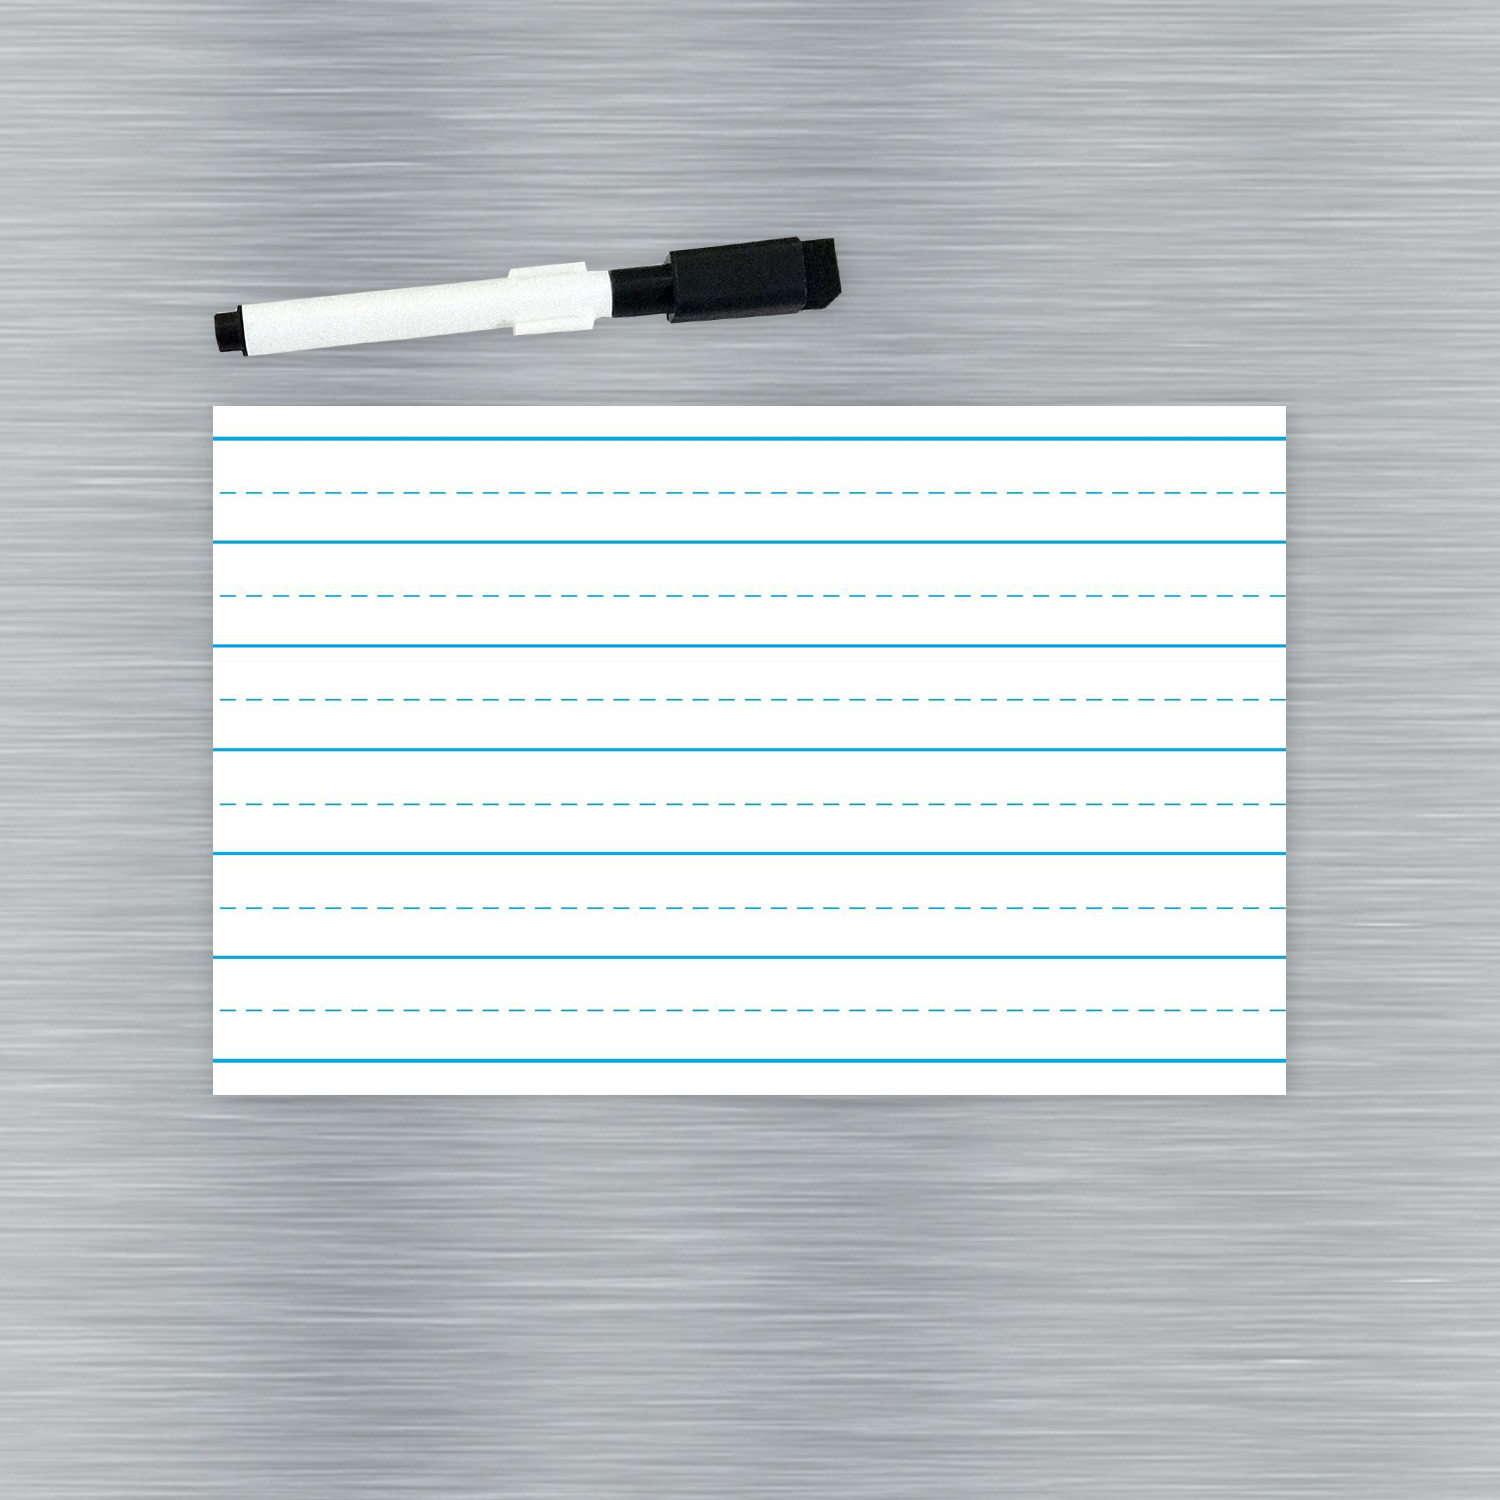 Dry erase sheet Handwriting paper design. 11x17 inches.